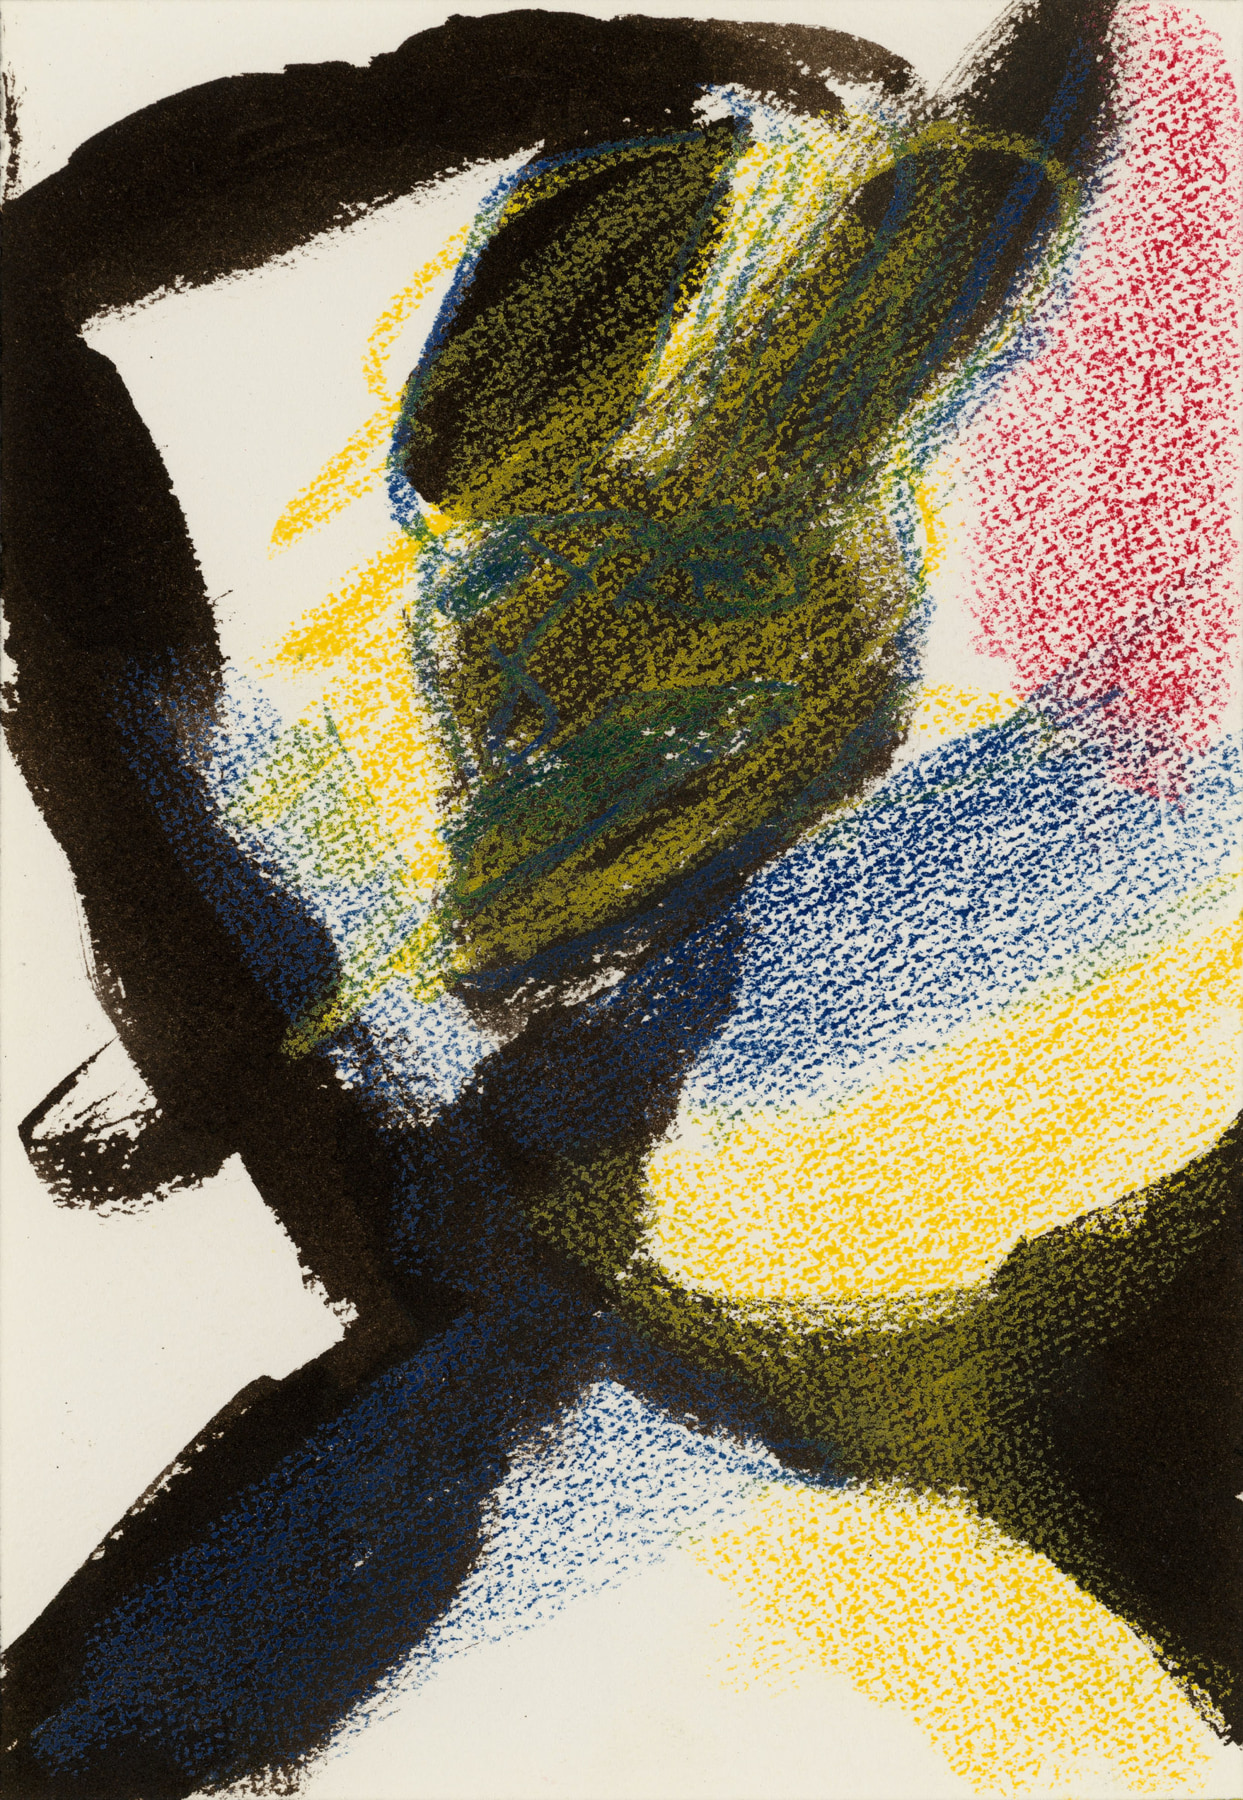 Don Van Vliet
&amp;quot;Untitled&amp;quot;, 1985
India ink, crayon on paper
10 x 7 inches
25.5 x 18 cm
VLZ 468